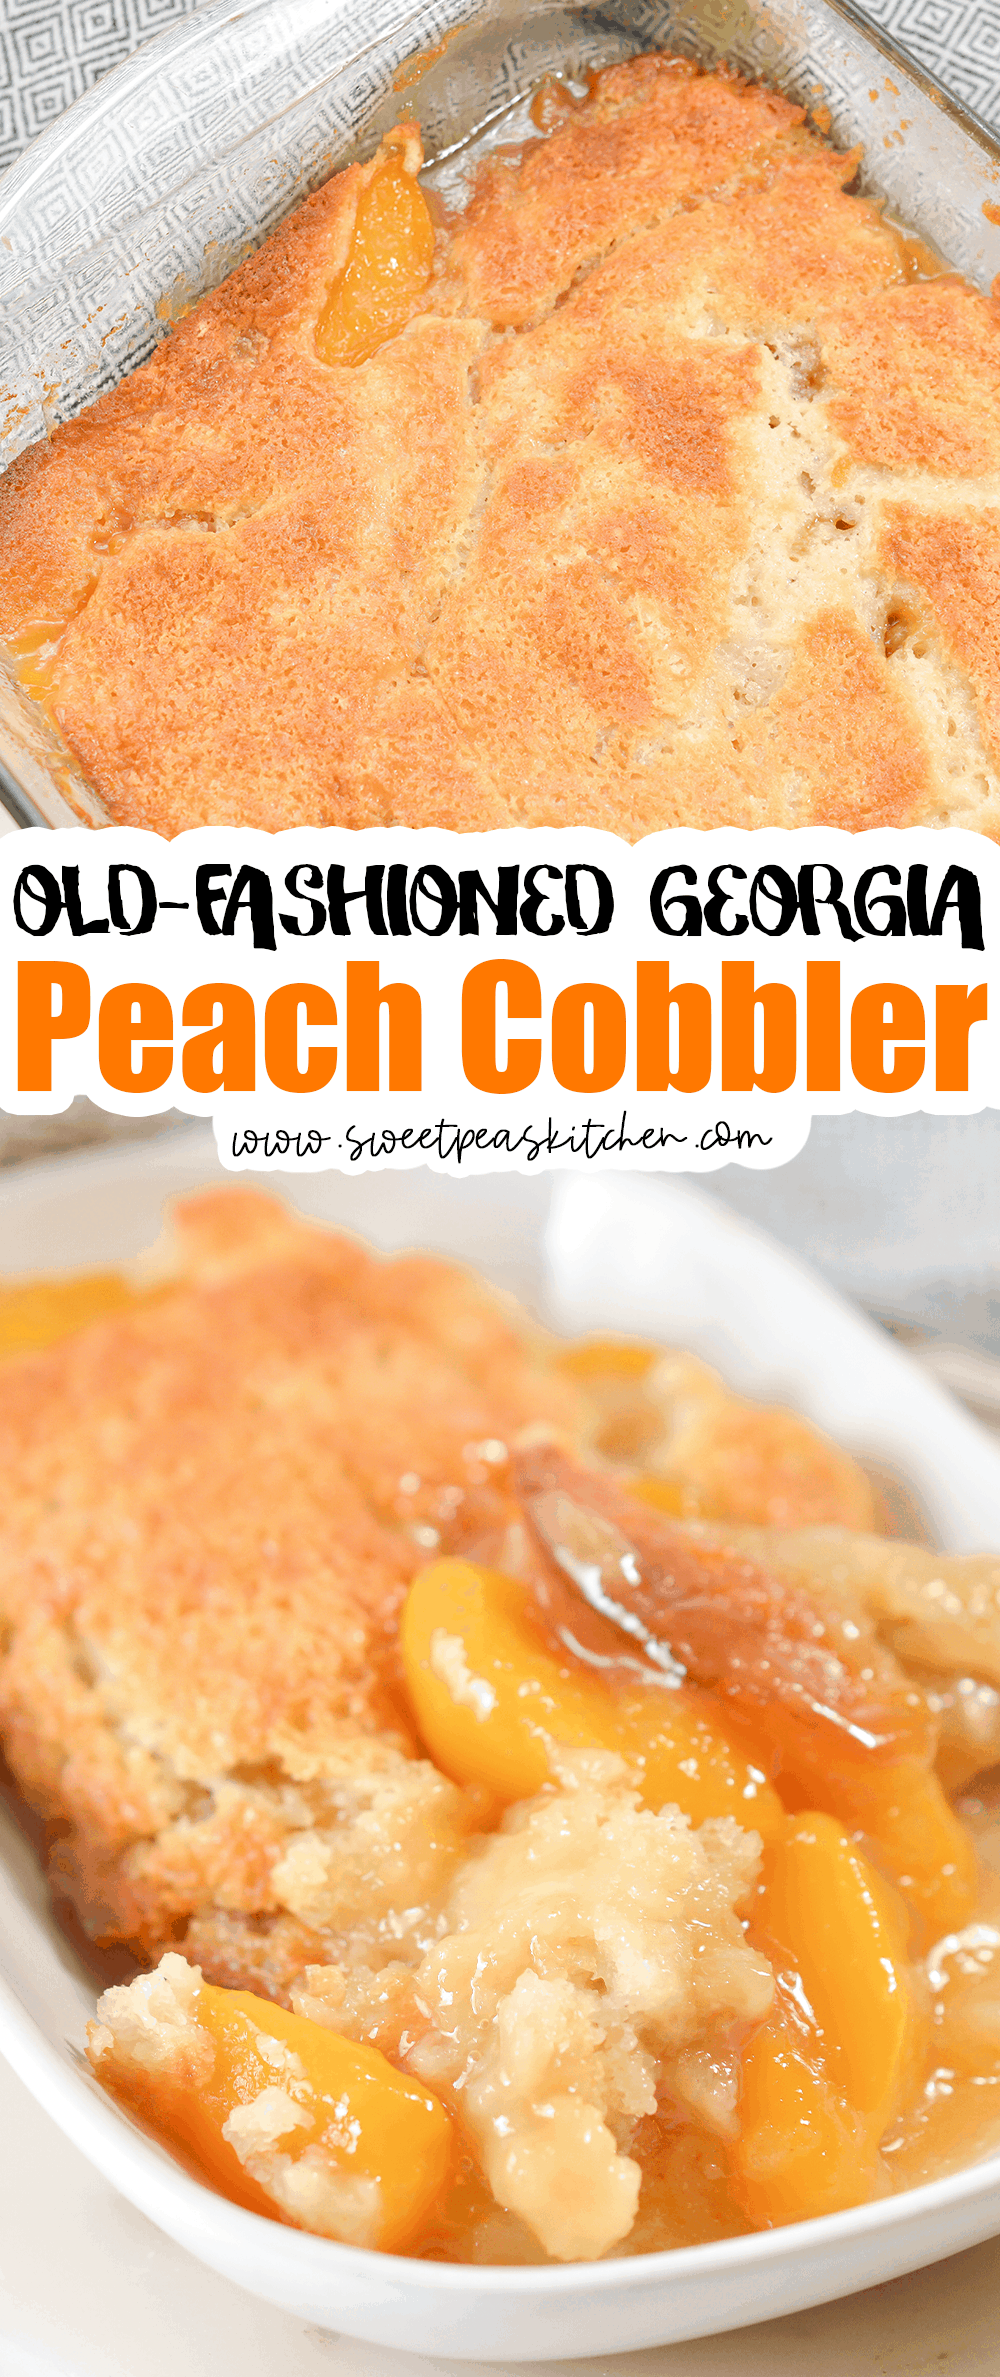 Georgia Peach Cobbler on pinterest